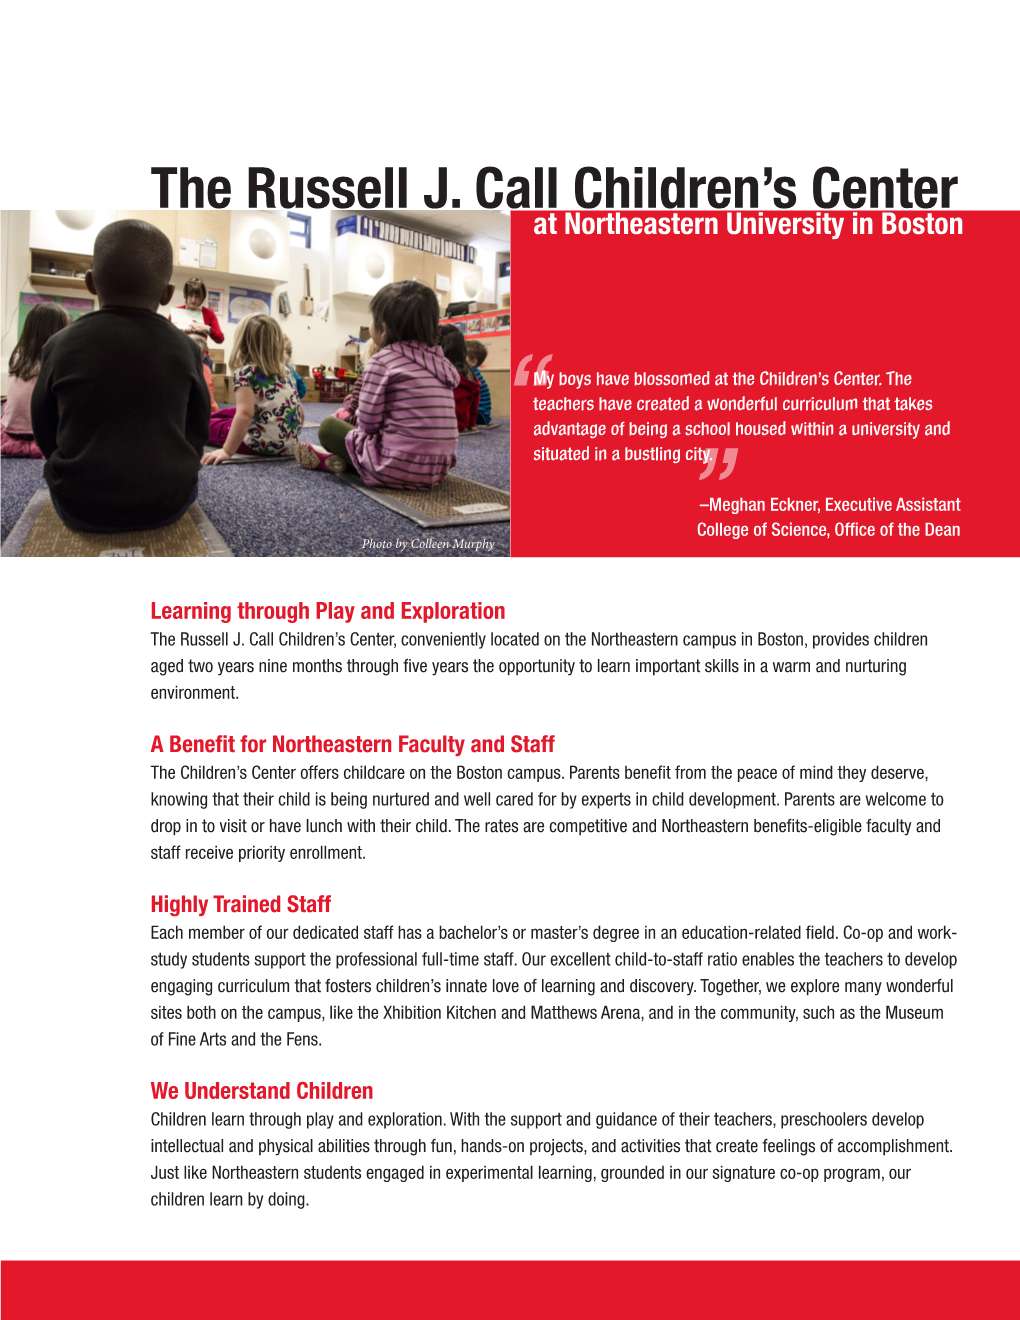 The Russell J. Call Children's Center